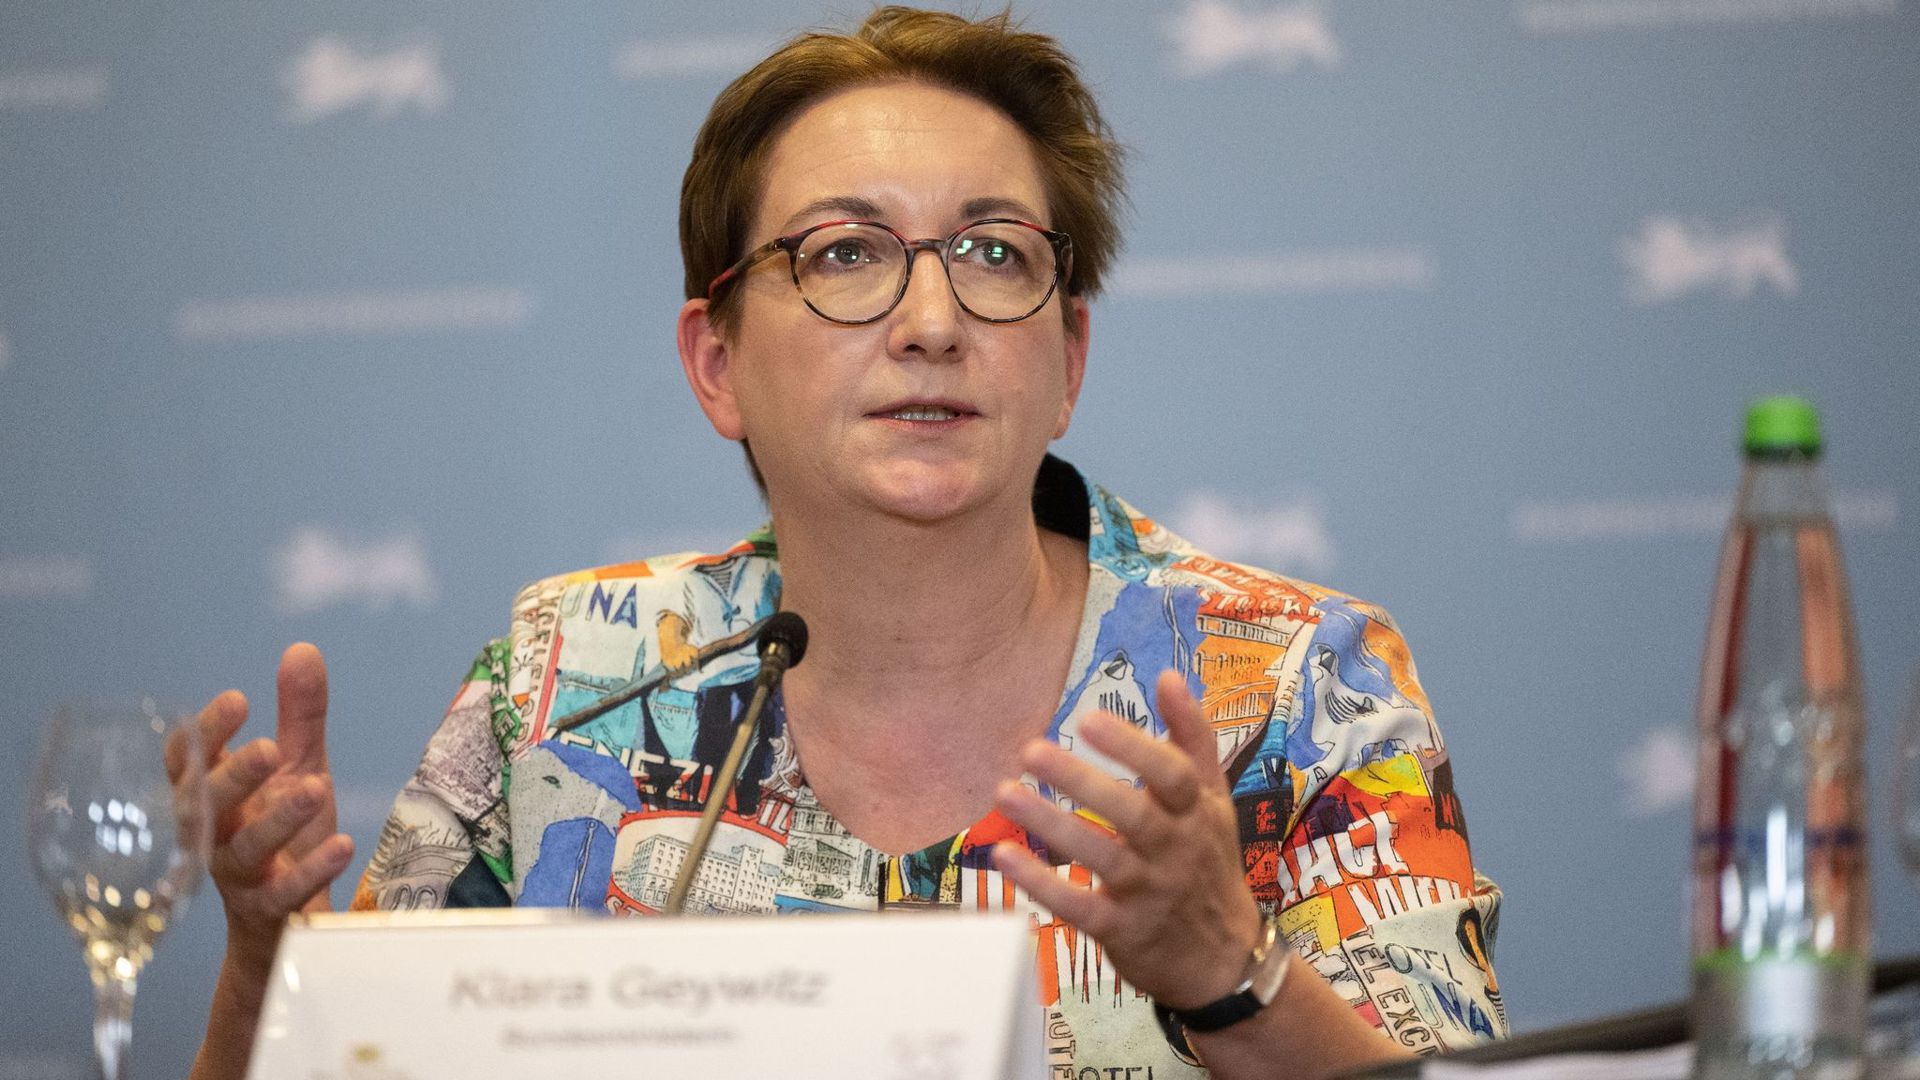 Bundesbauministerin Klara Geywitz (SPD).